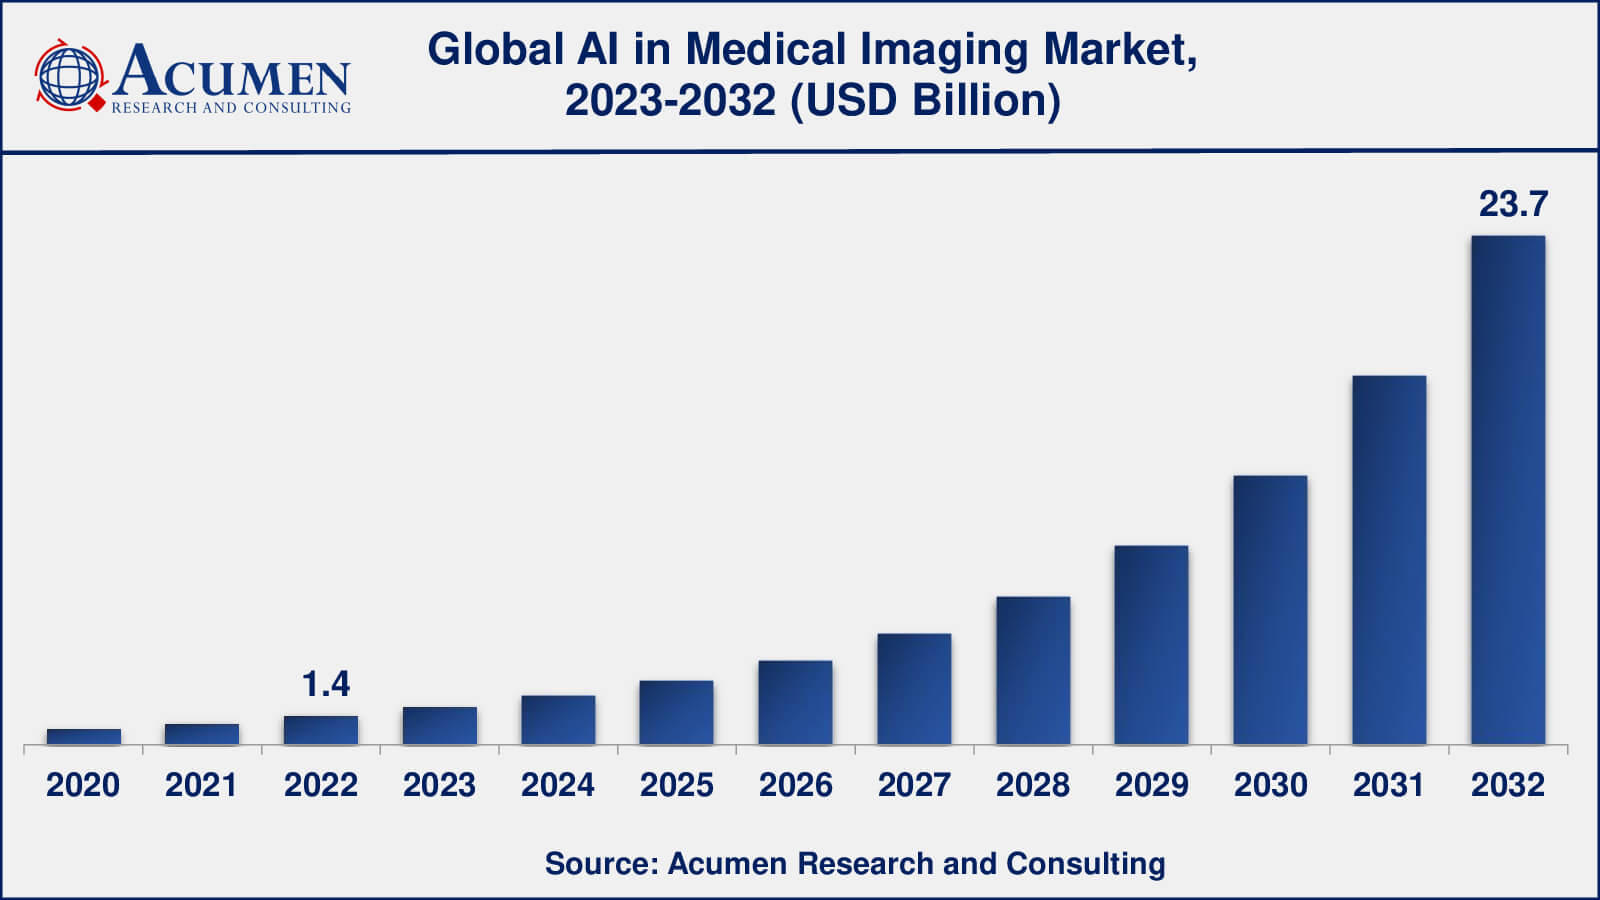 AI in Medical Imaging Market Analysis Period